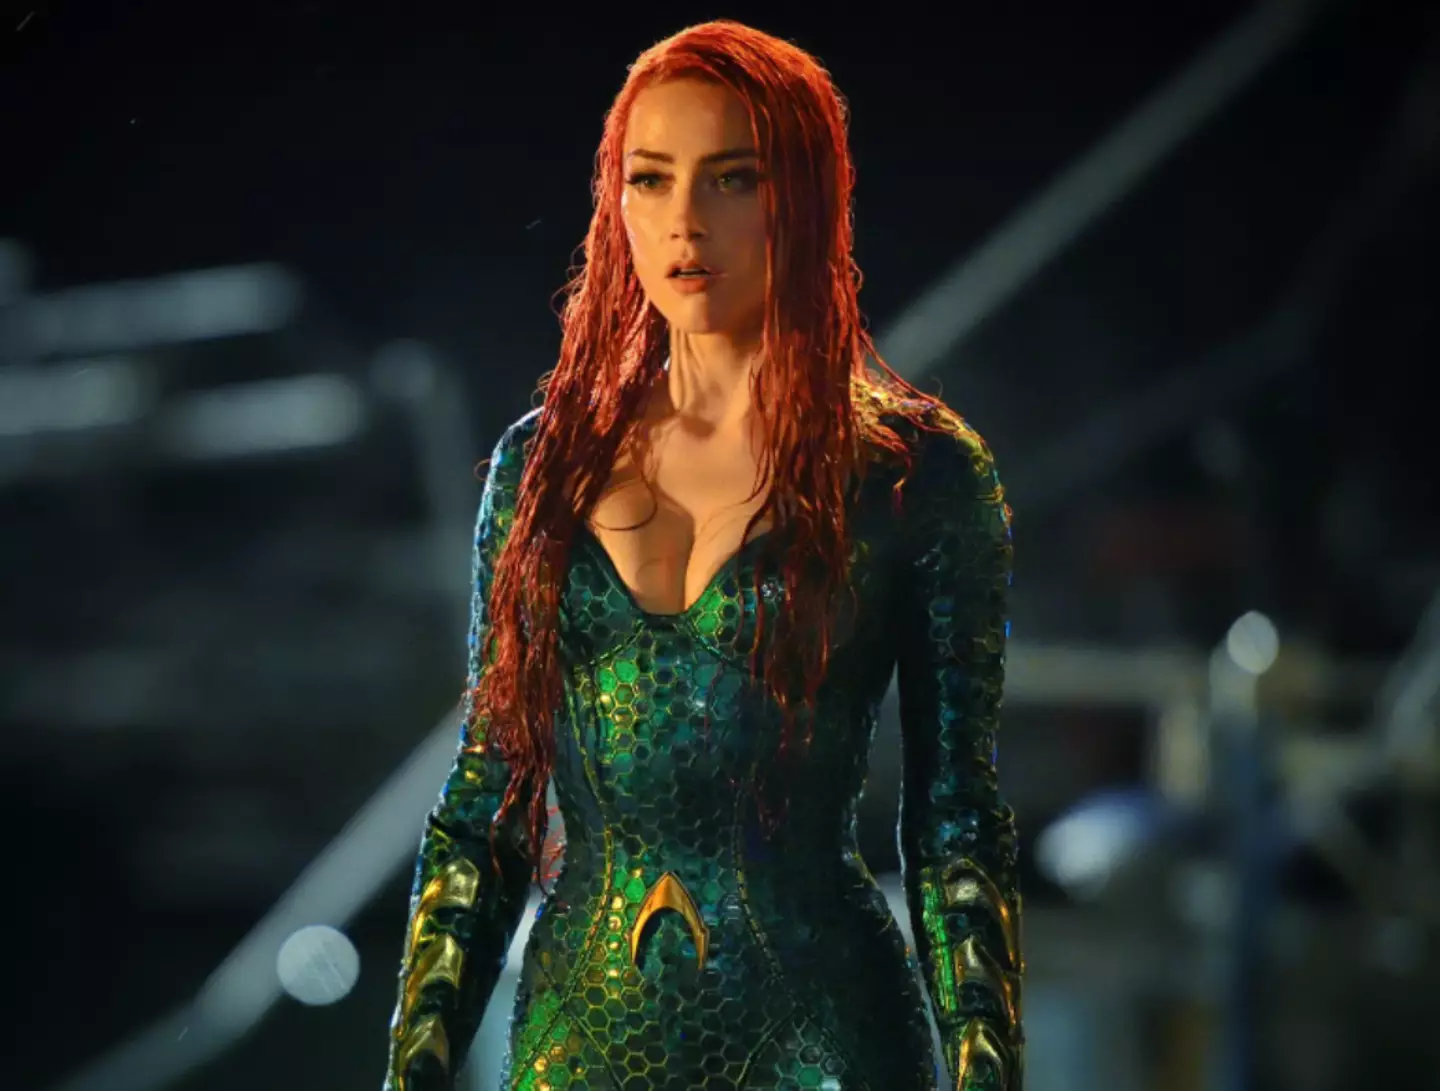 Heard has earned millions for roles in films like Aquaman.